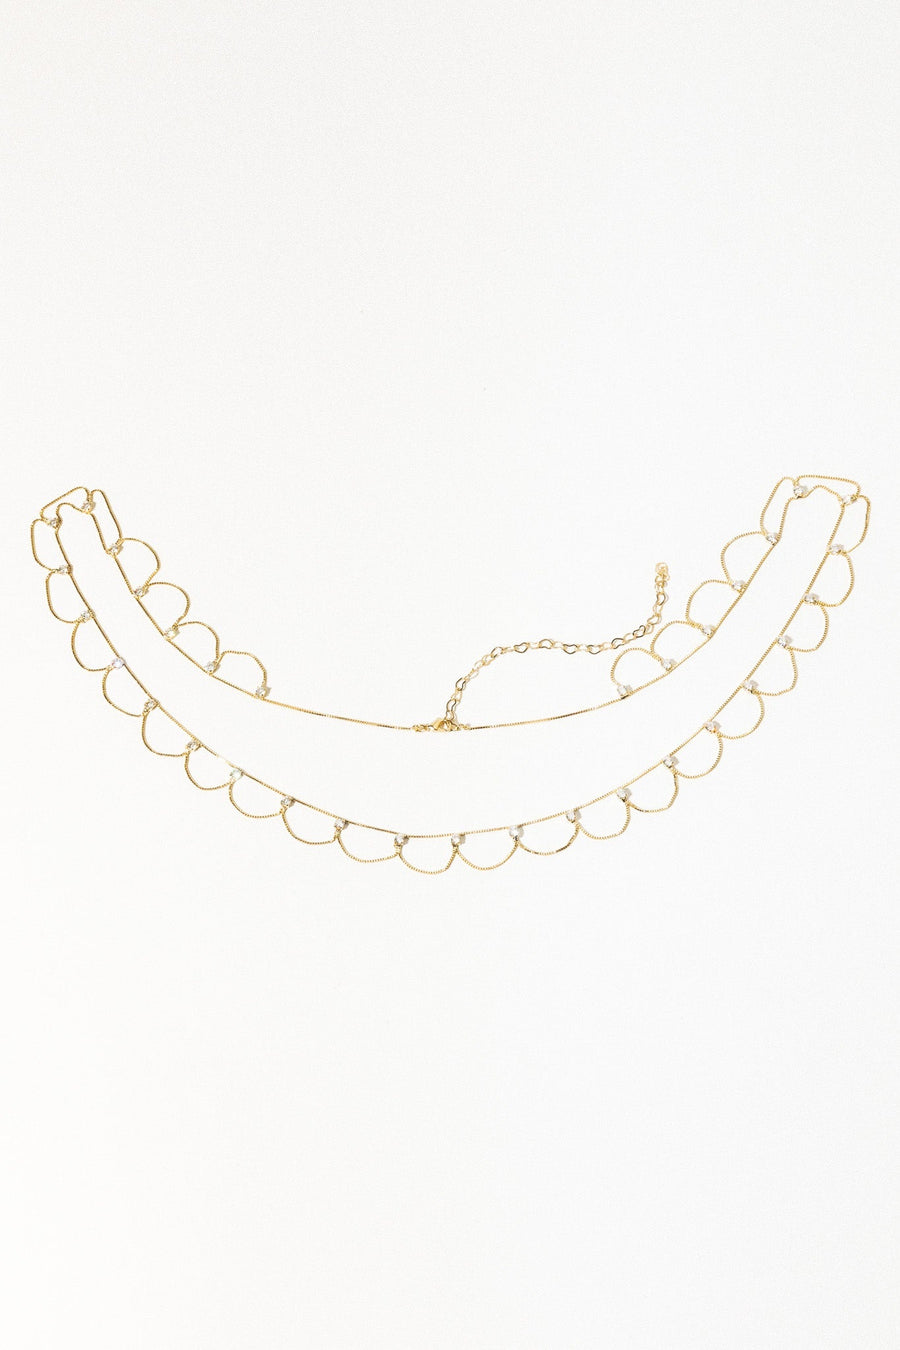 Dona Italia Jewelry Gold Belly Chain